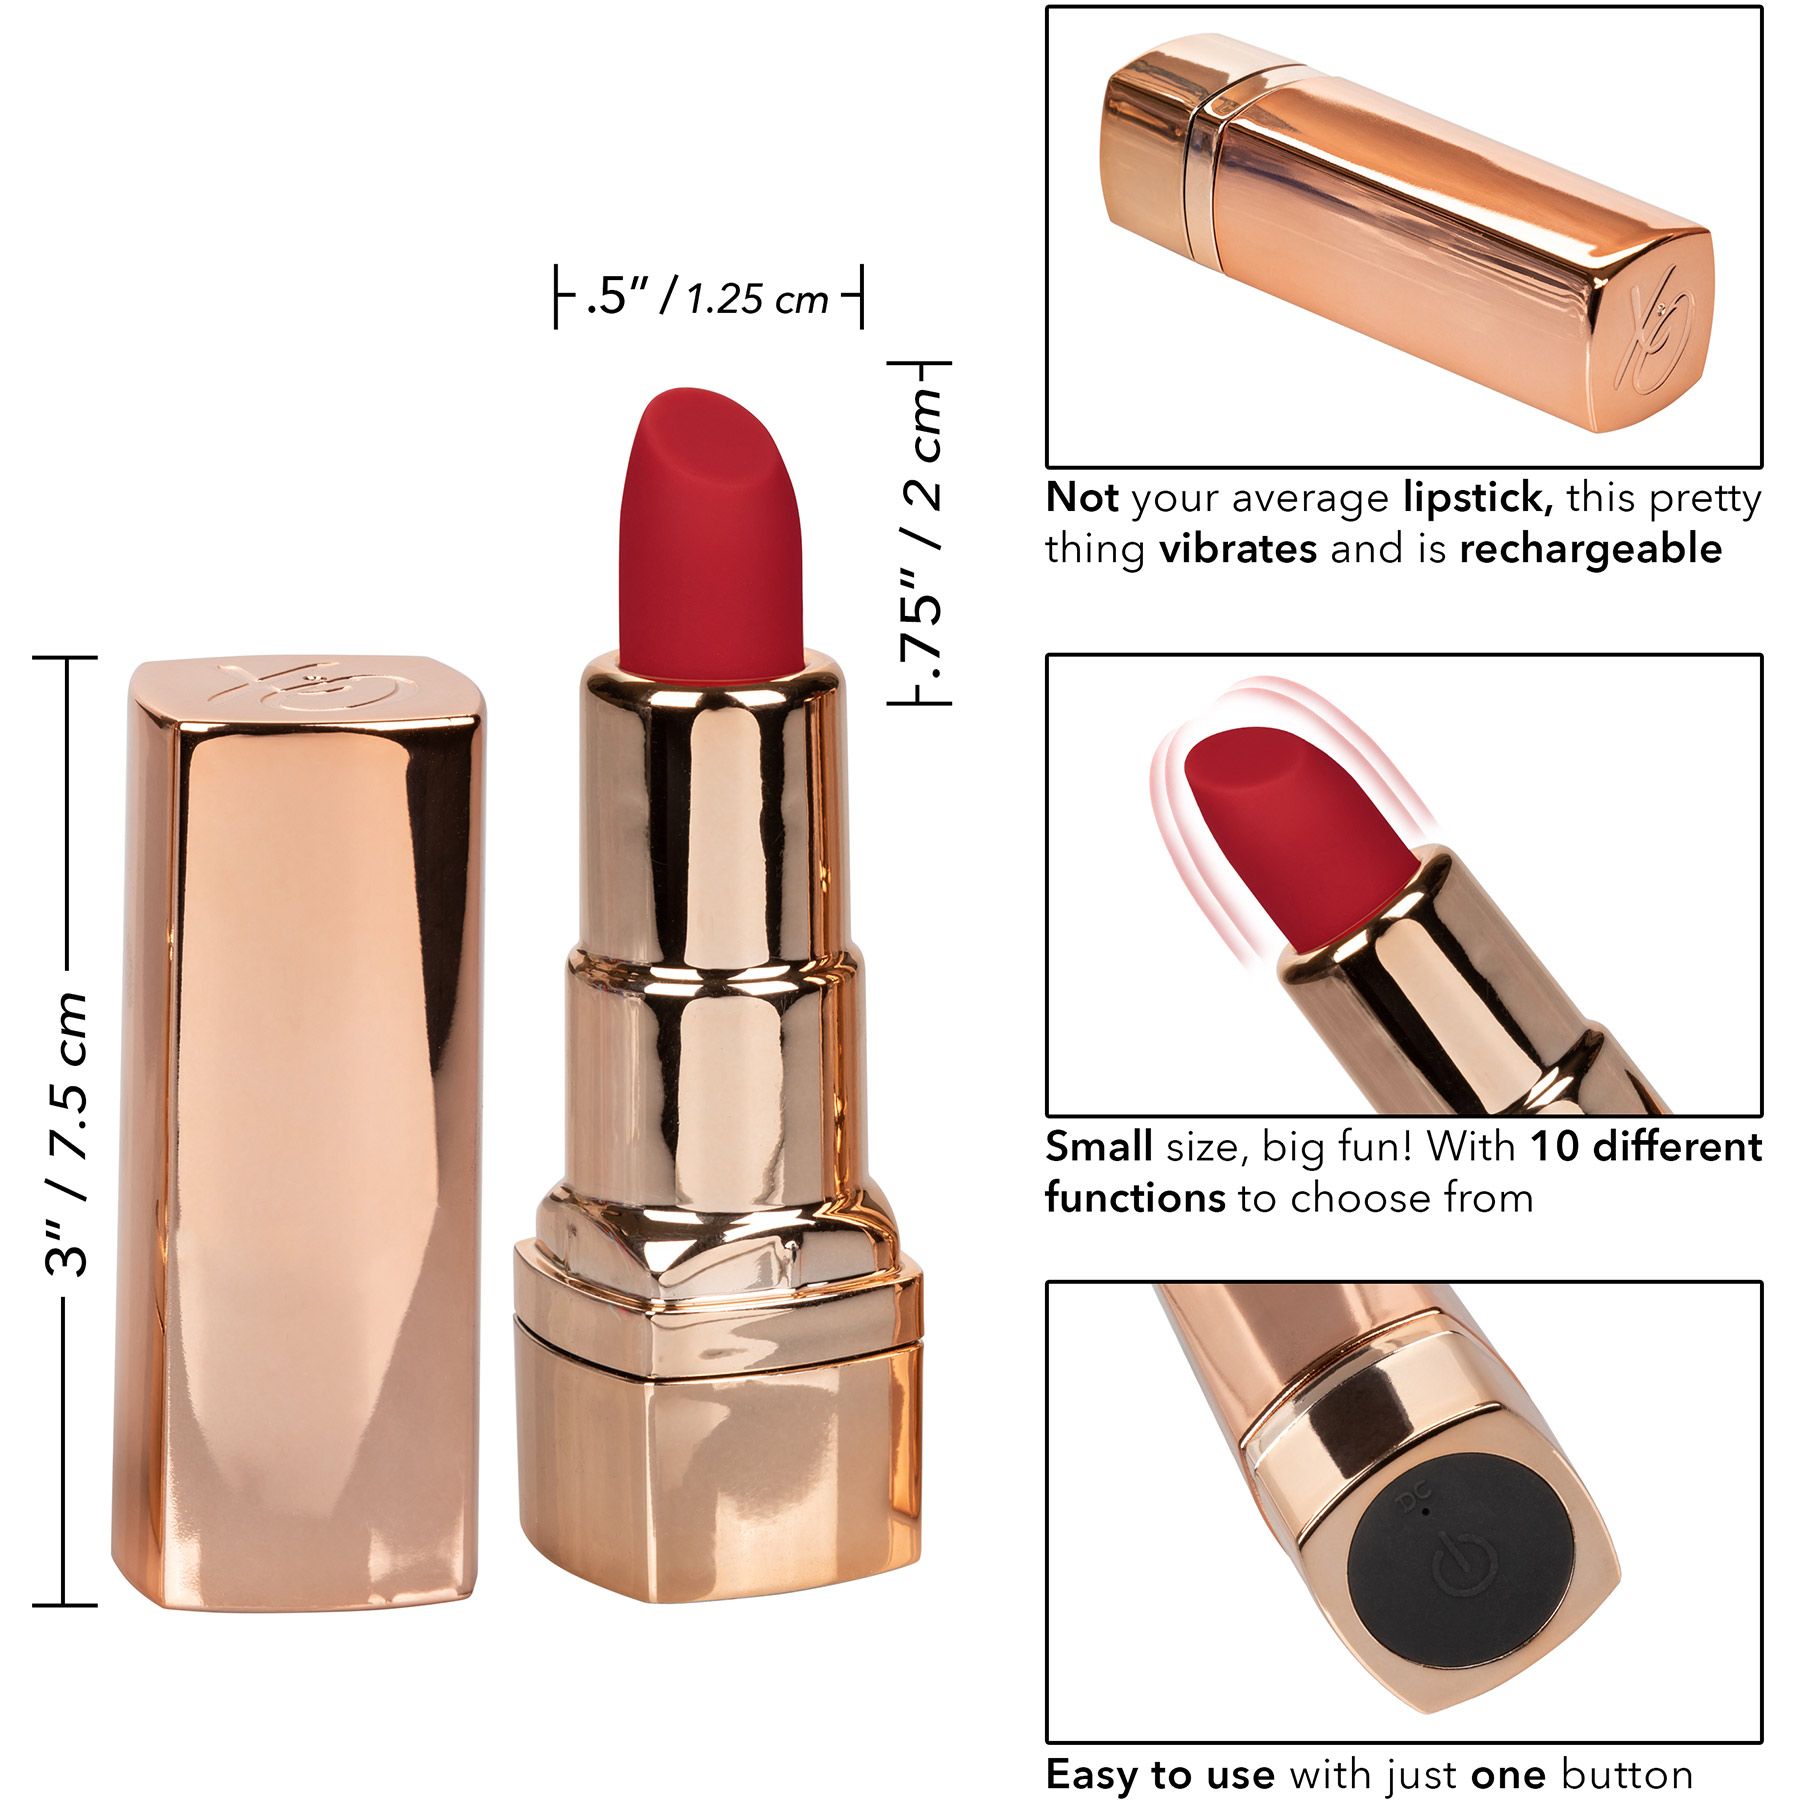 Hide & Play Rechargeable Lipstick Vibrator - Measurements